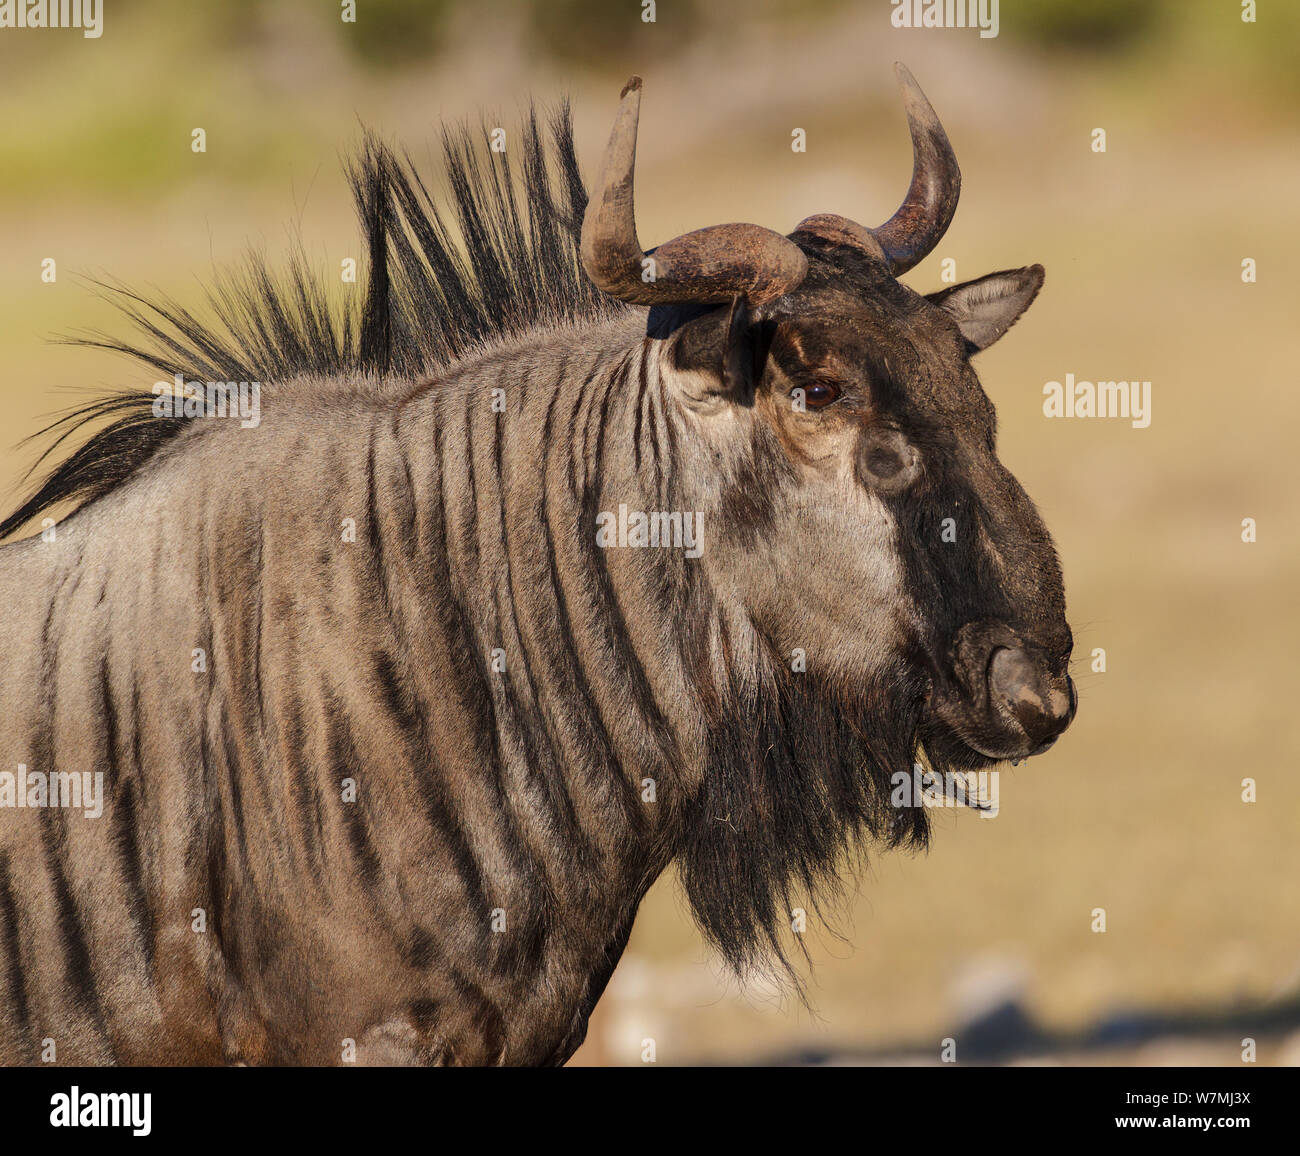 Wildebeest (Connochaetes taurinus) profile portrait, Etosha National Park, Namibia Stock Photo